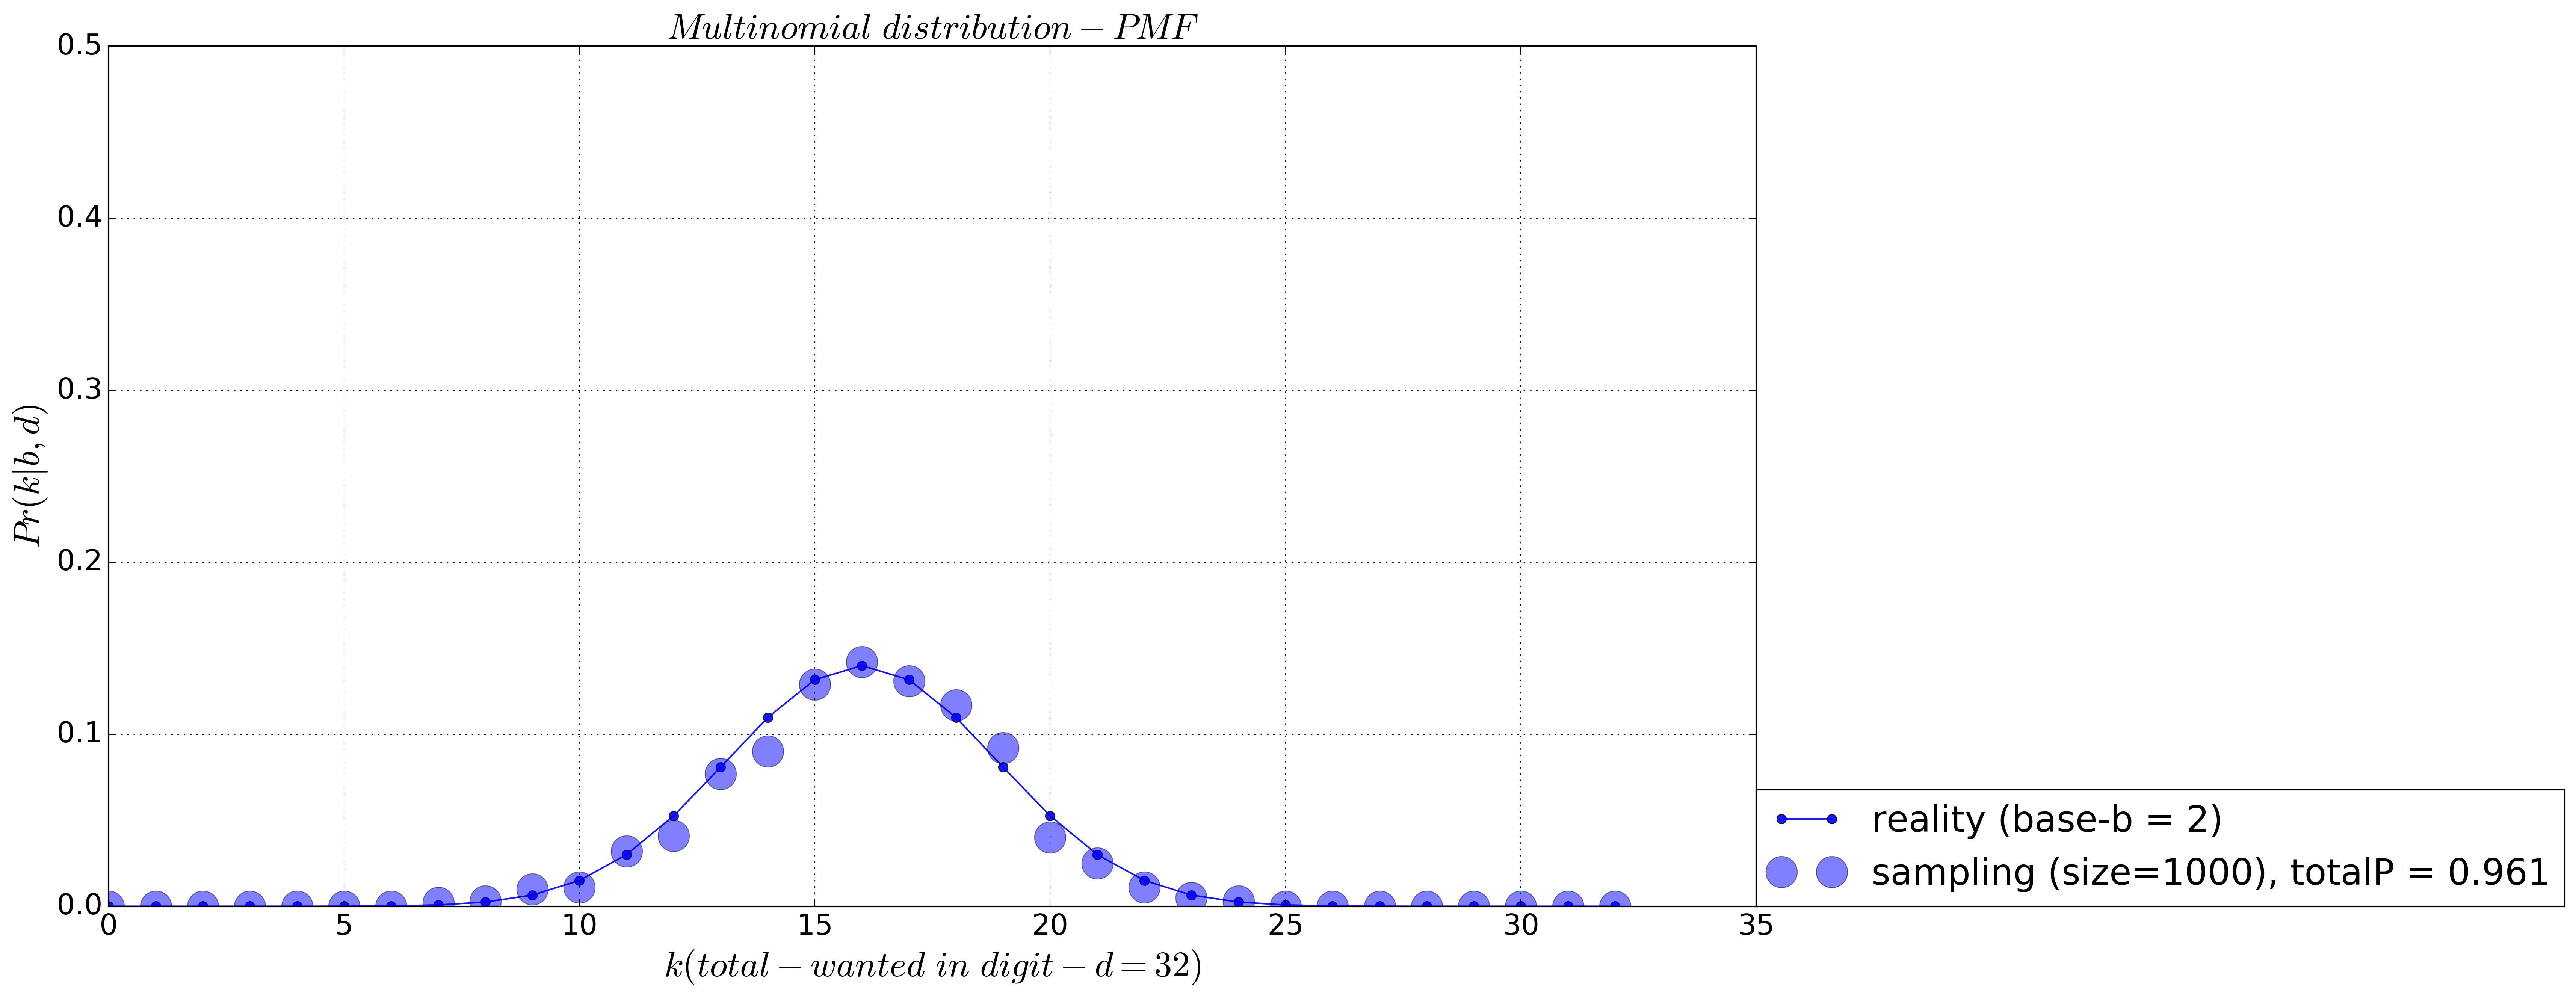 multinomial-distribution-sampling-reality-base2.png